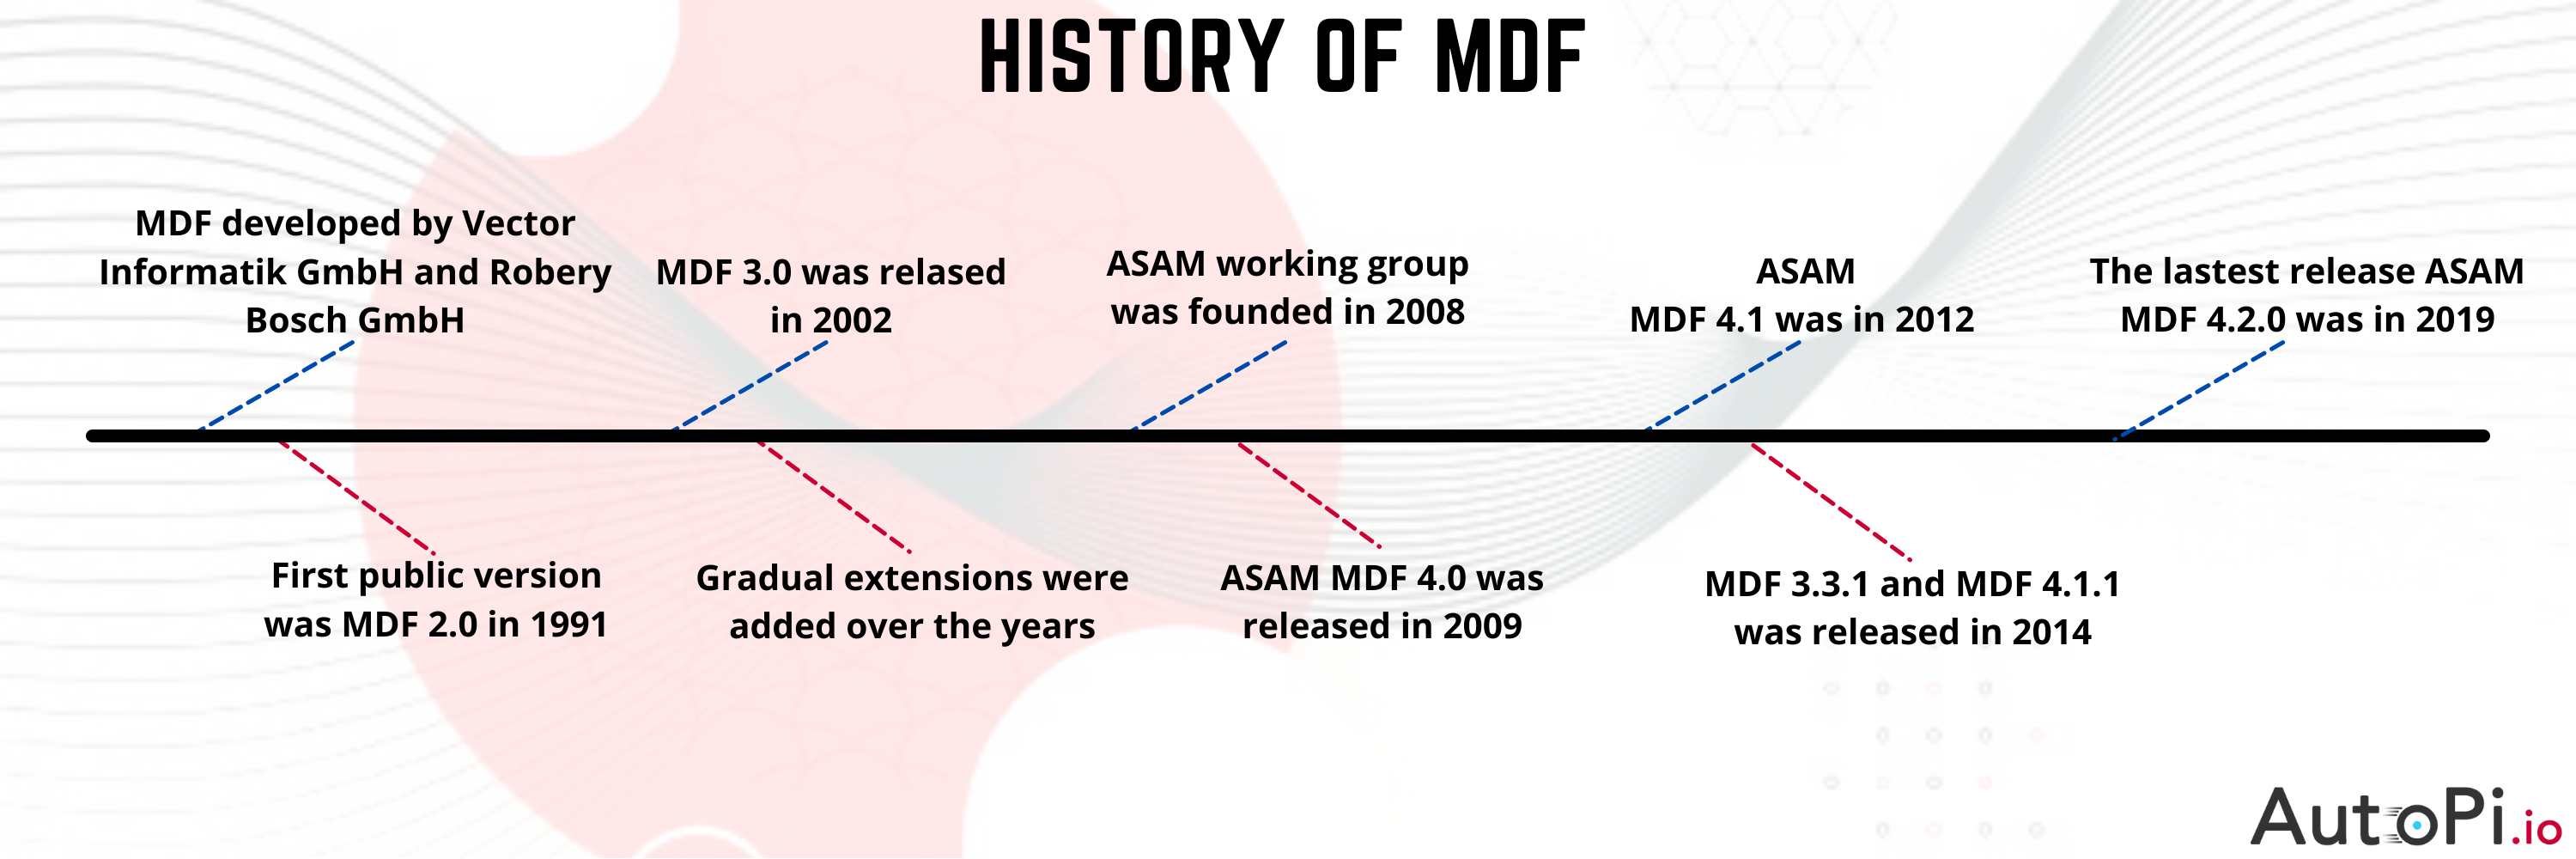 History of MDF